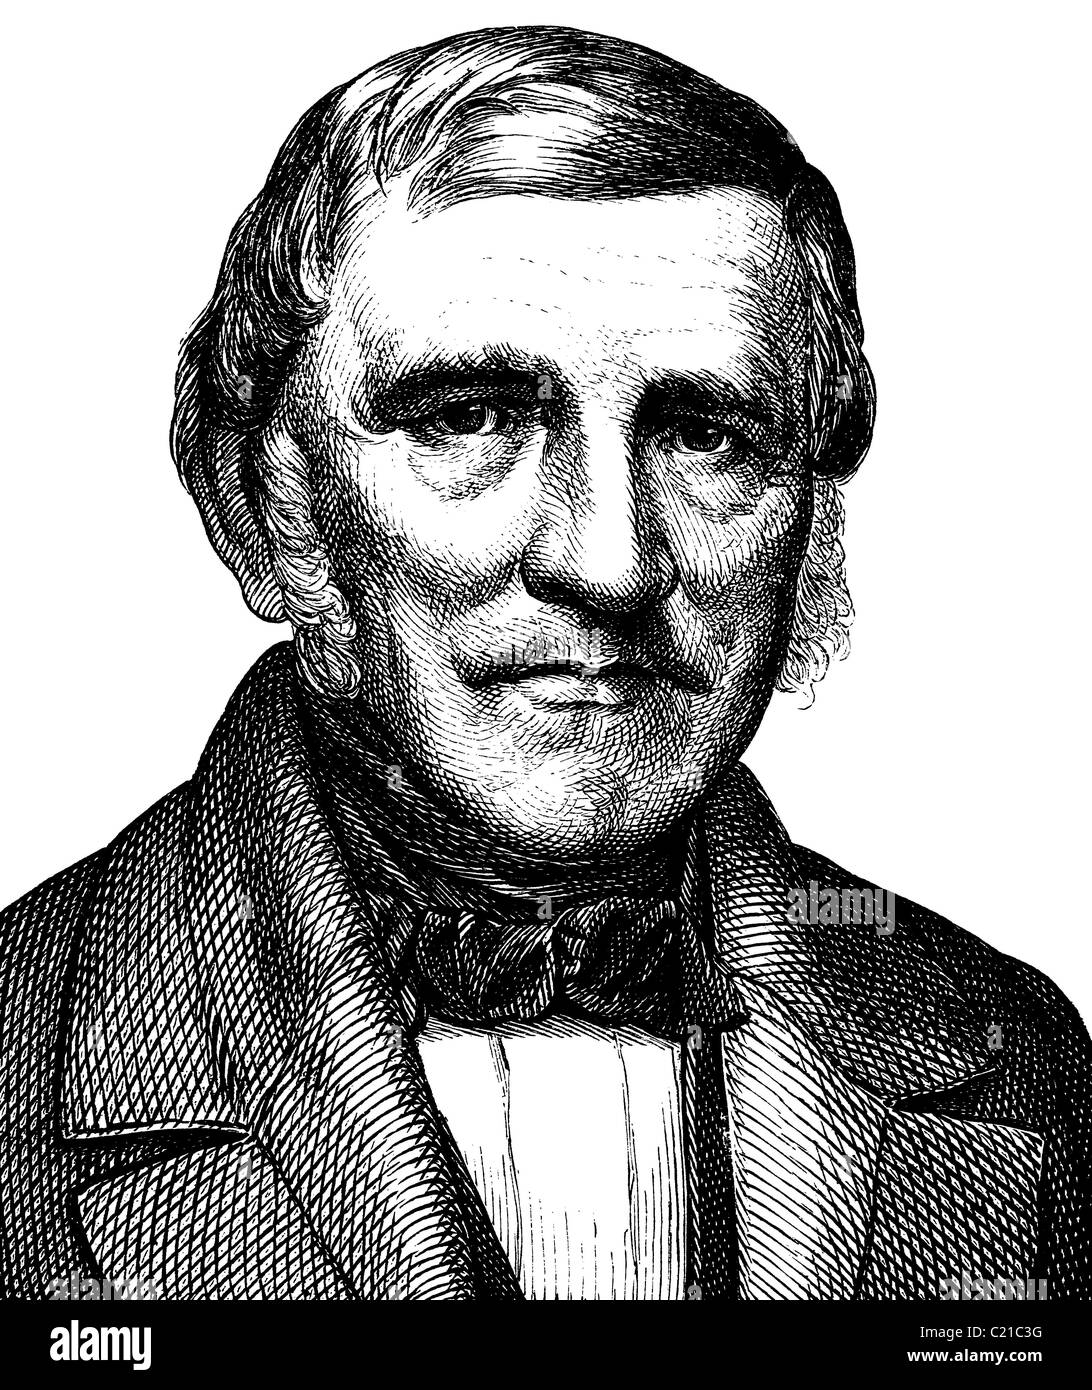 Digital improved image of Johann Franz Encke, 1791 - 1865, astronomer, portrait, historical illustration, 1880 Stock Photo